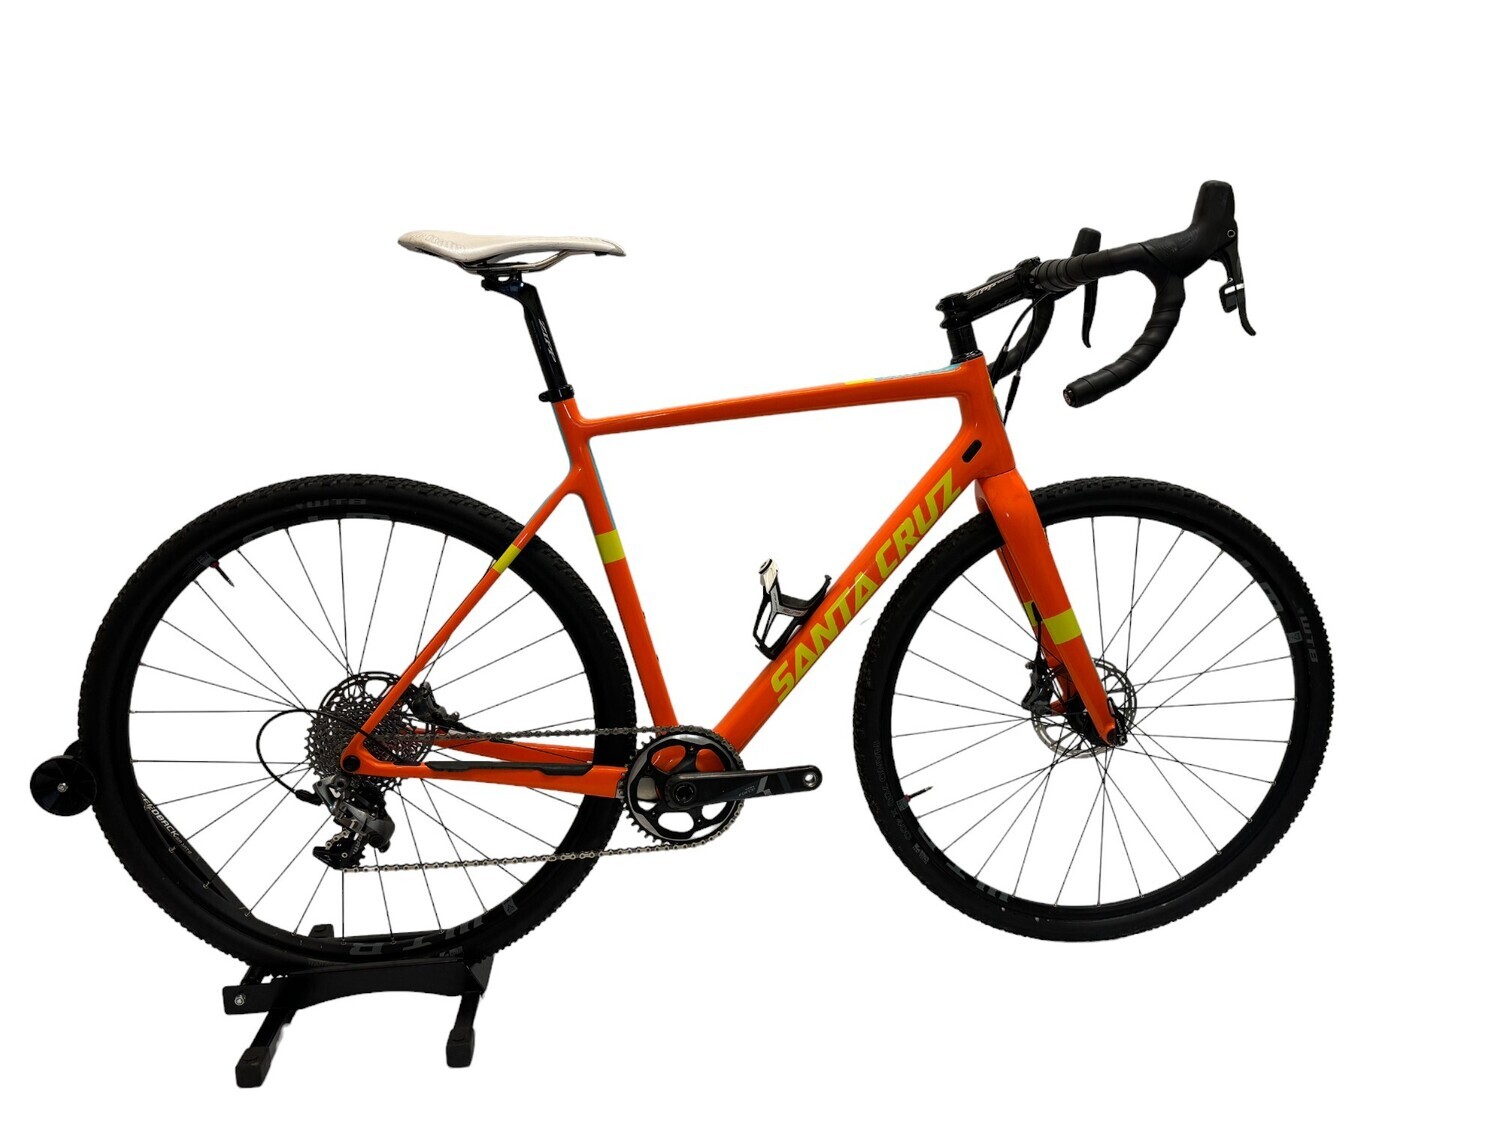 56cm Santa Cruz Stigmata CC Gravel Bike